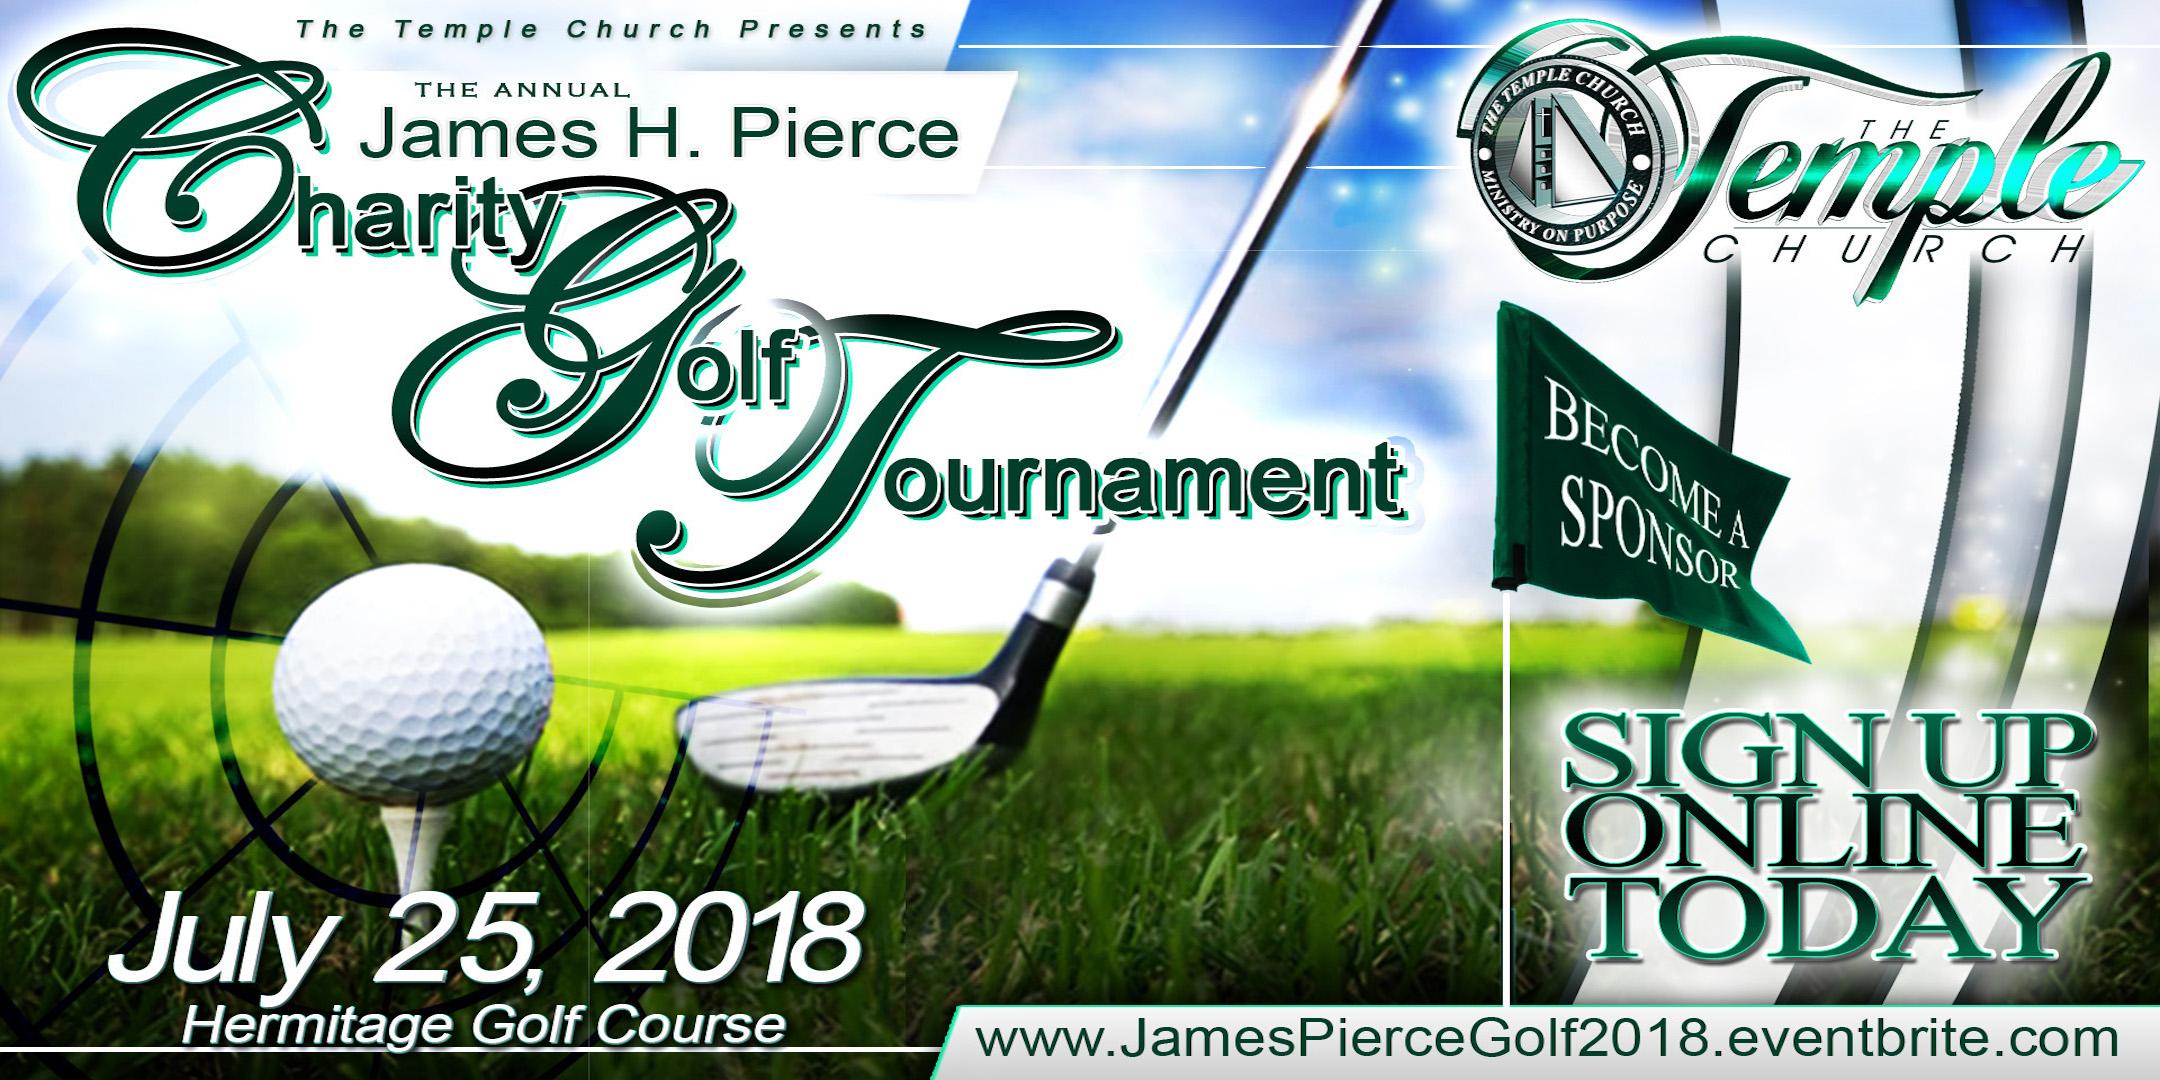 The James H. Pierce Golf Tournament 2018